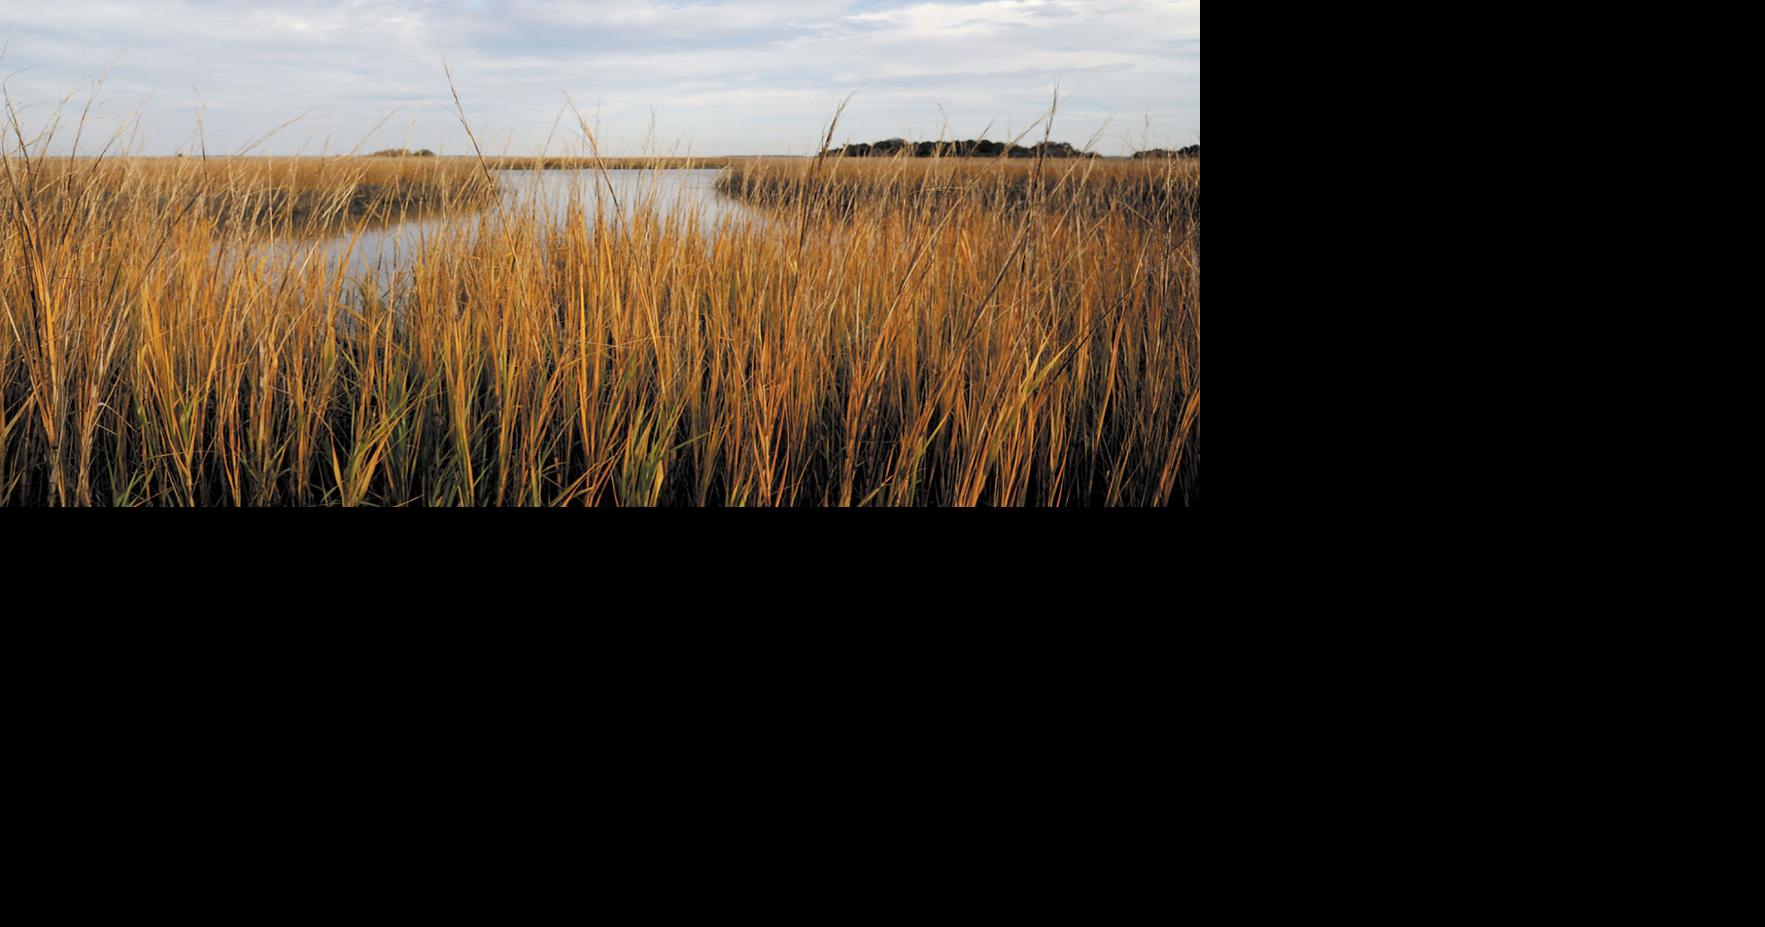 Exploring the salt marsh | Gim Columns | goldenislesmagazine.com